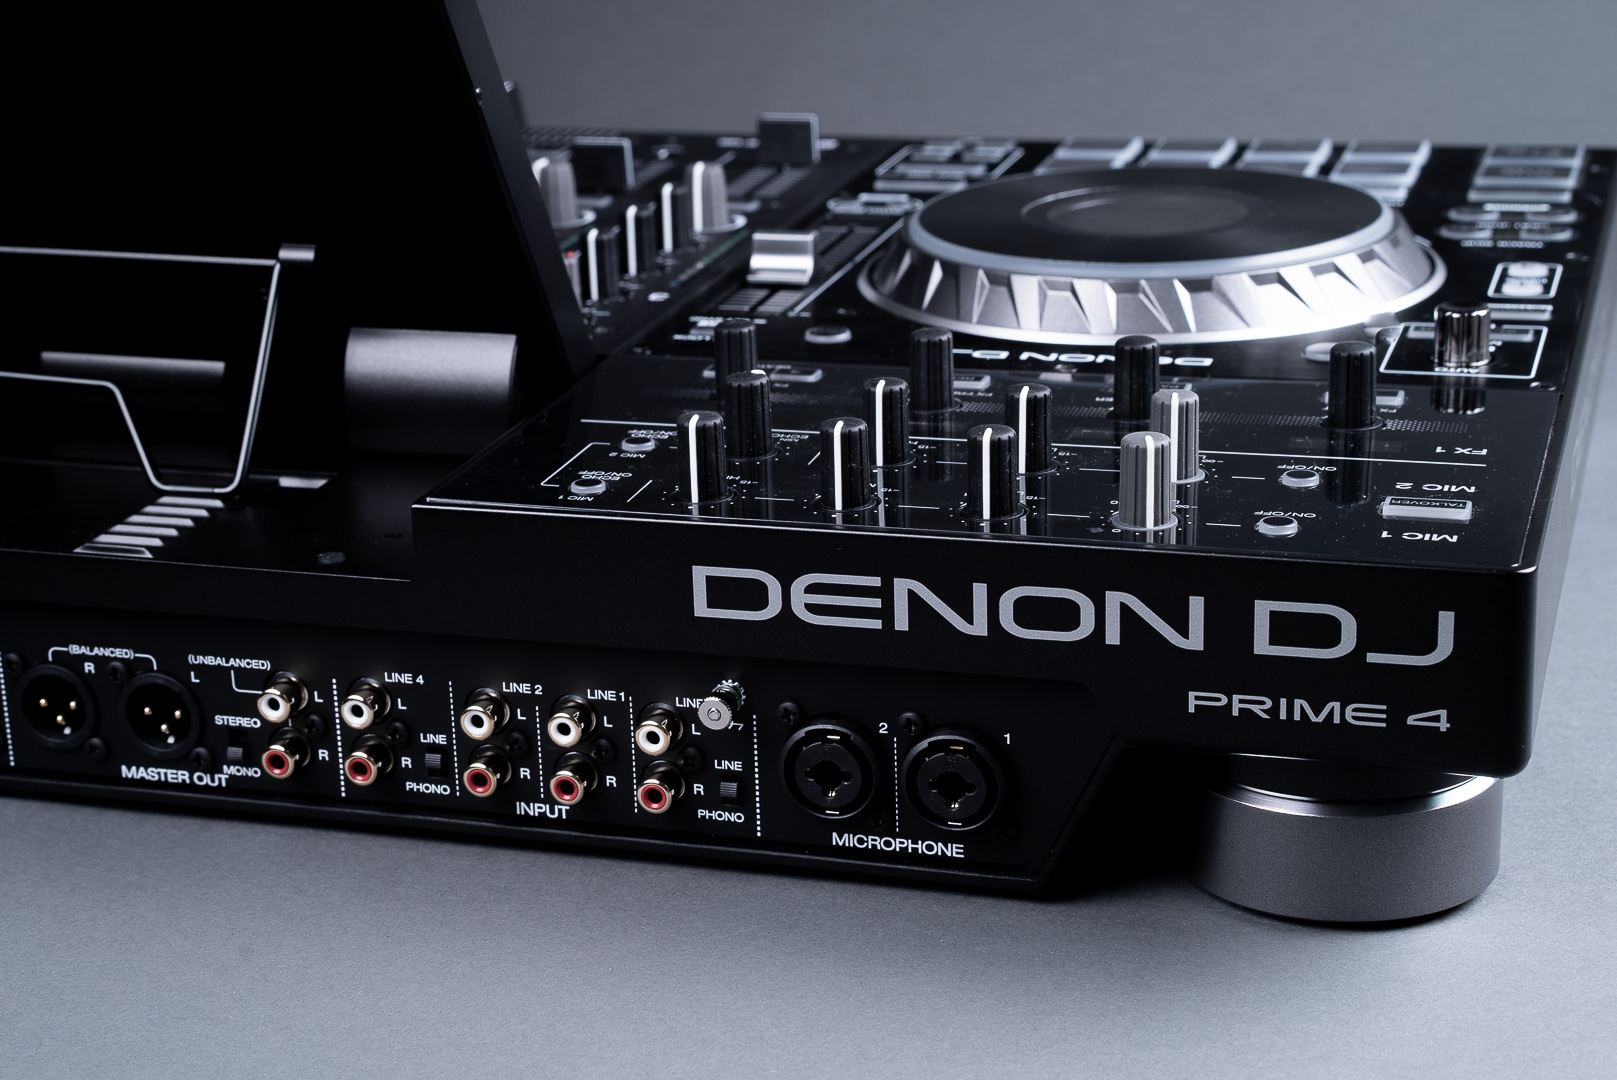 Top 3 Features Denon DJ Prime 4 Standalone DJ System